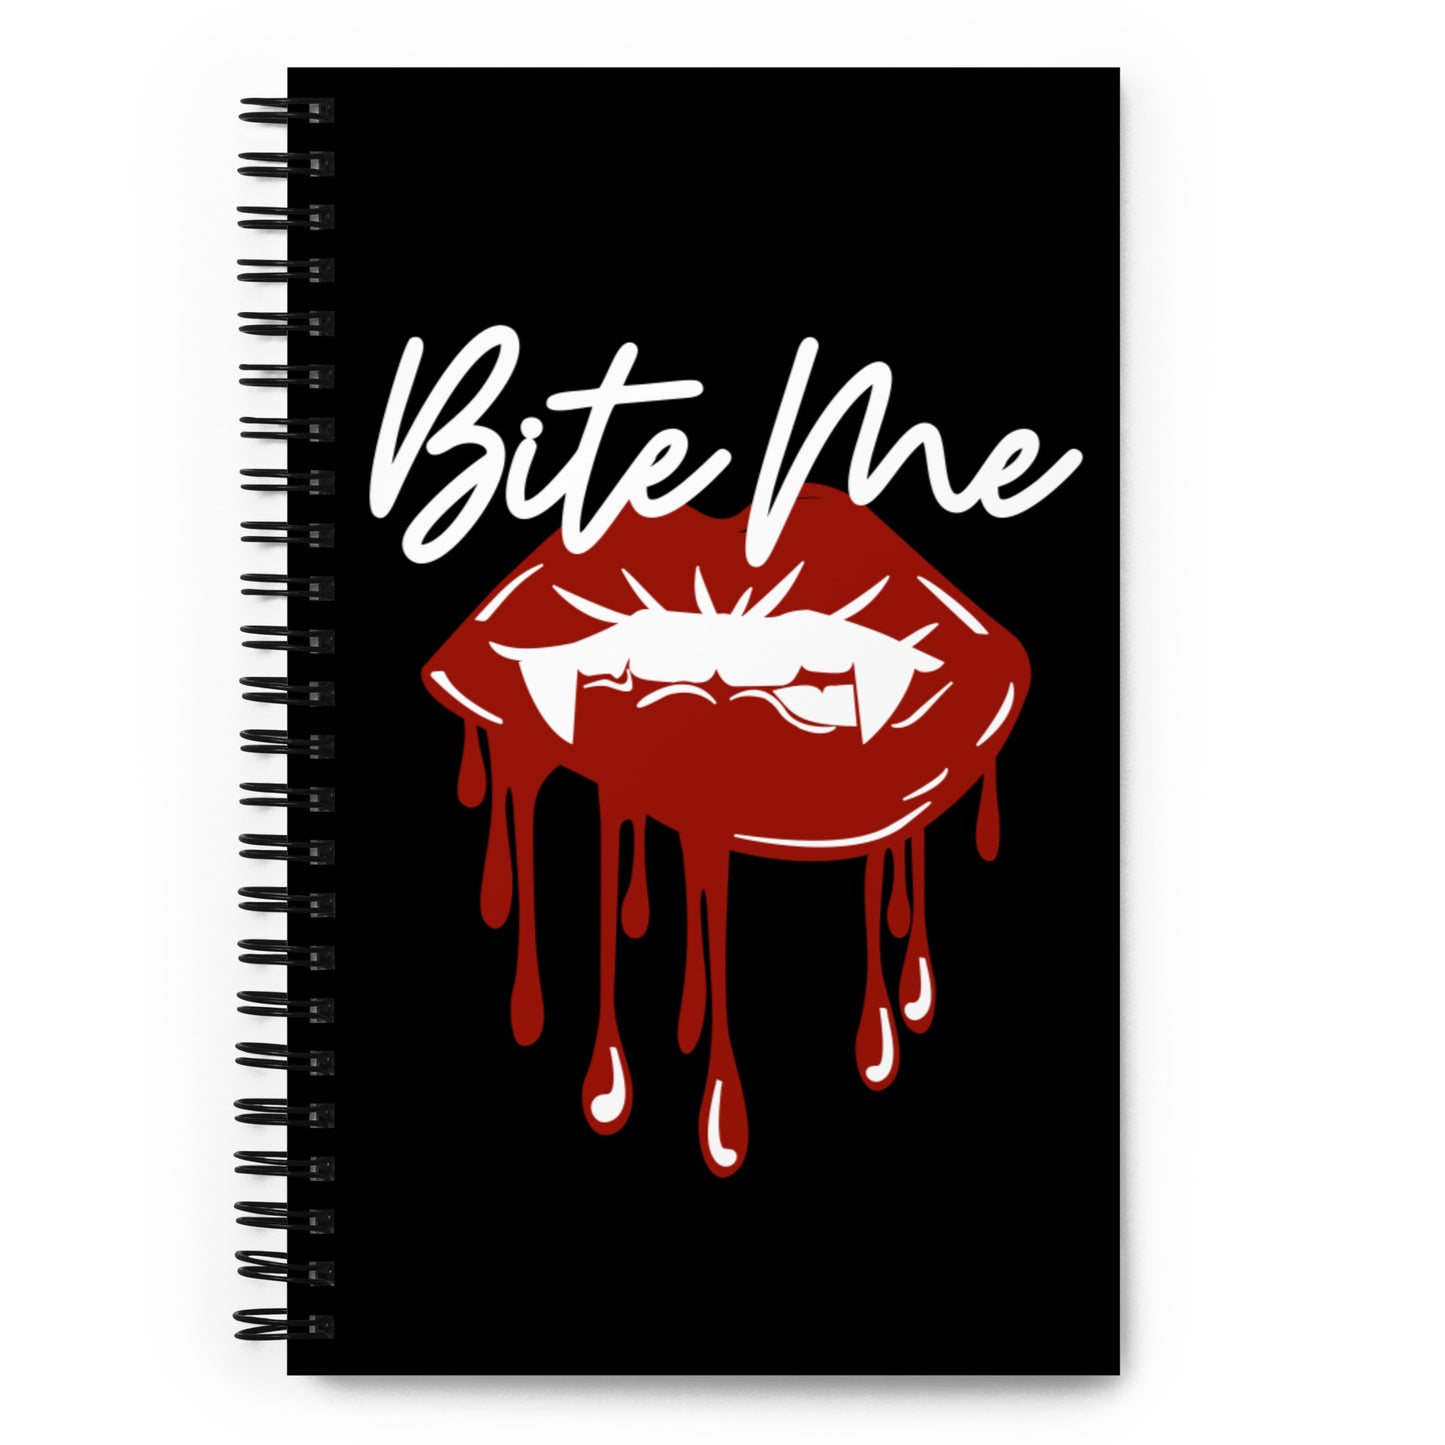 Bite Me spiral notebook for FireDrake Artistry